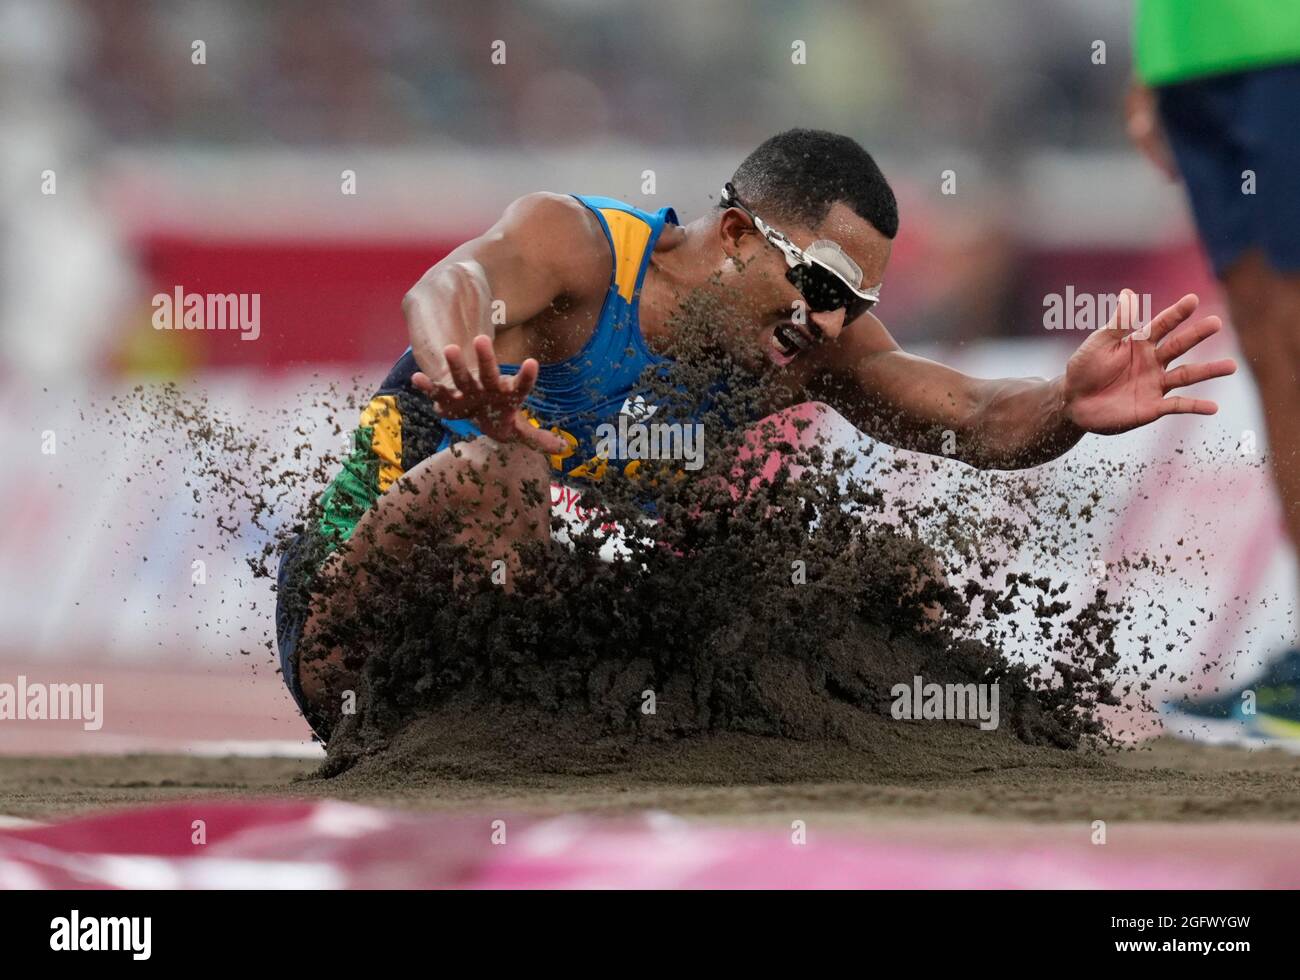 August 27, 2021: Ricardo Costa de Oliveira from Brazil at long jump during athletics at the Tokyo Paralympics, Tokyo Olympic Stadium, Tokyo, Japan. Kim Price/CSM Stock Photo